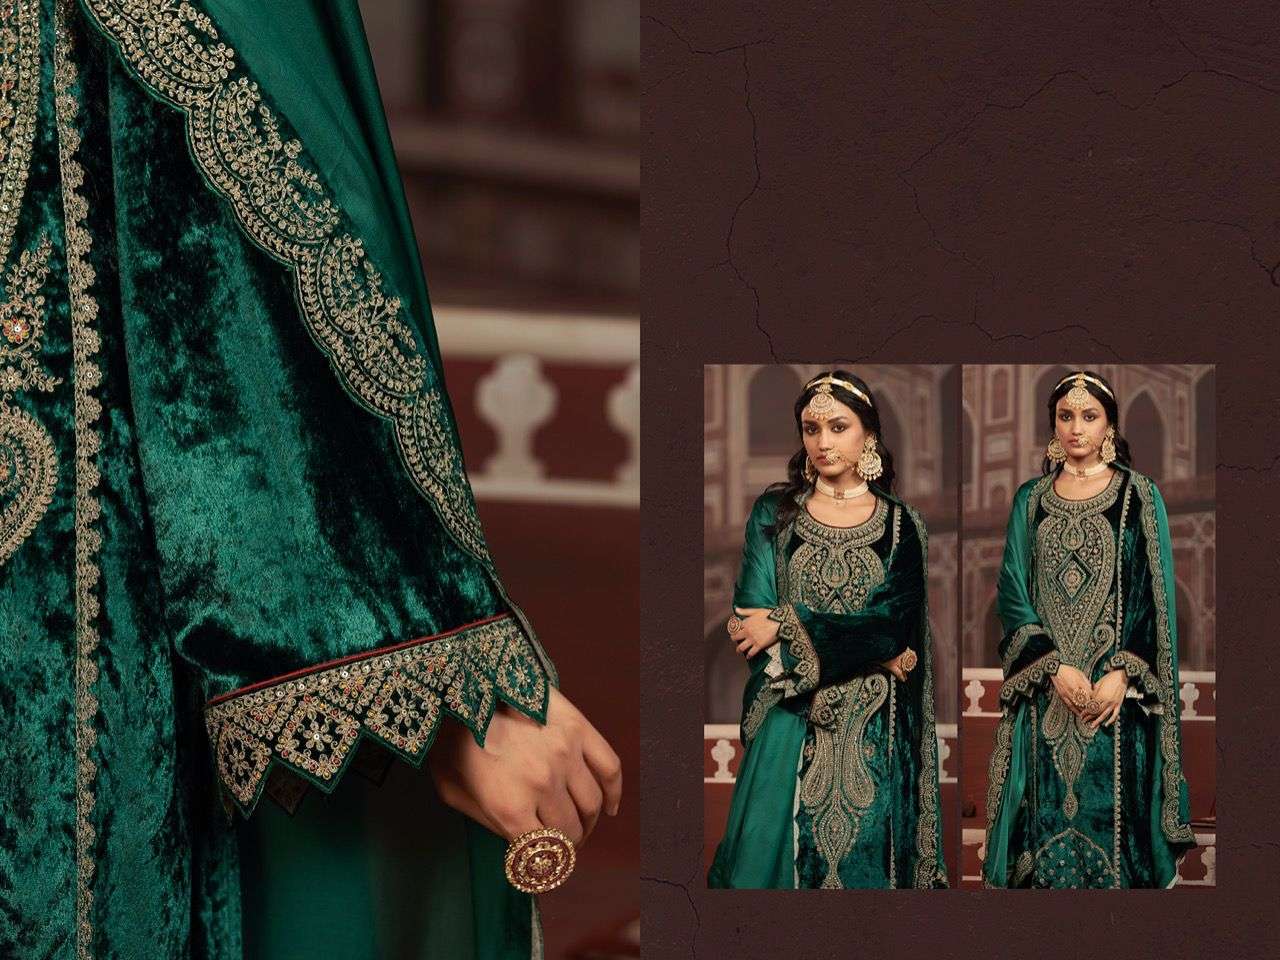 aiqa lifestyle kaafila velvet embroidery work salwar kameez online wholesale price surat